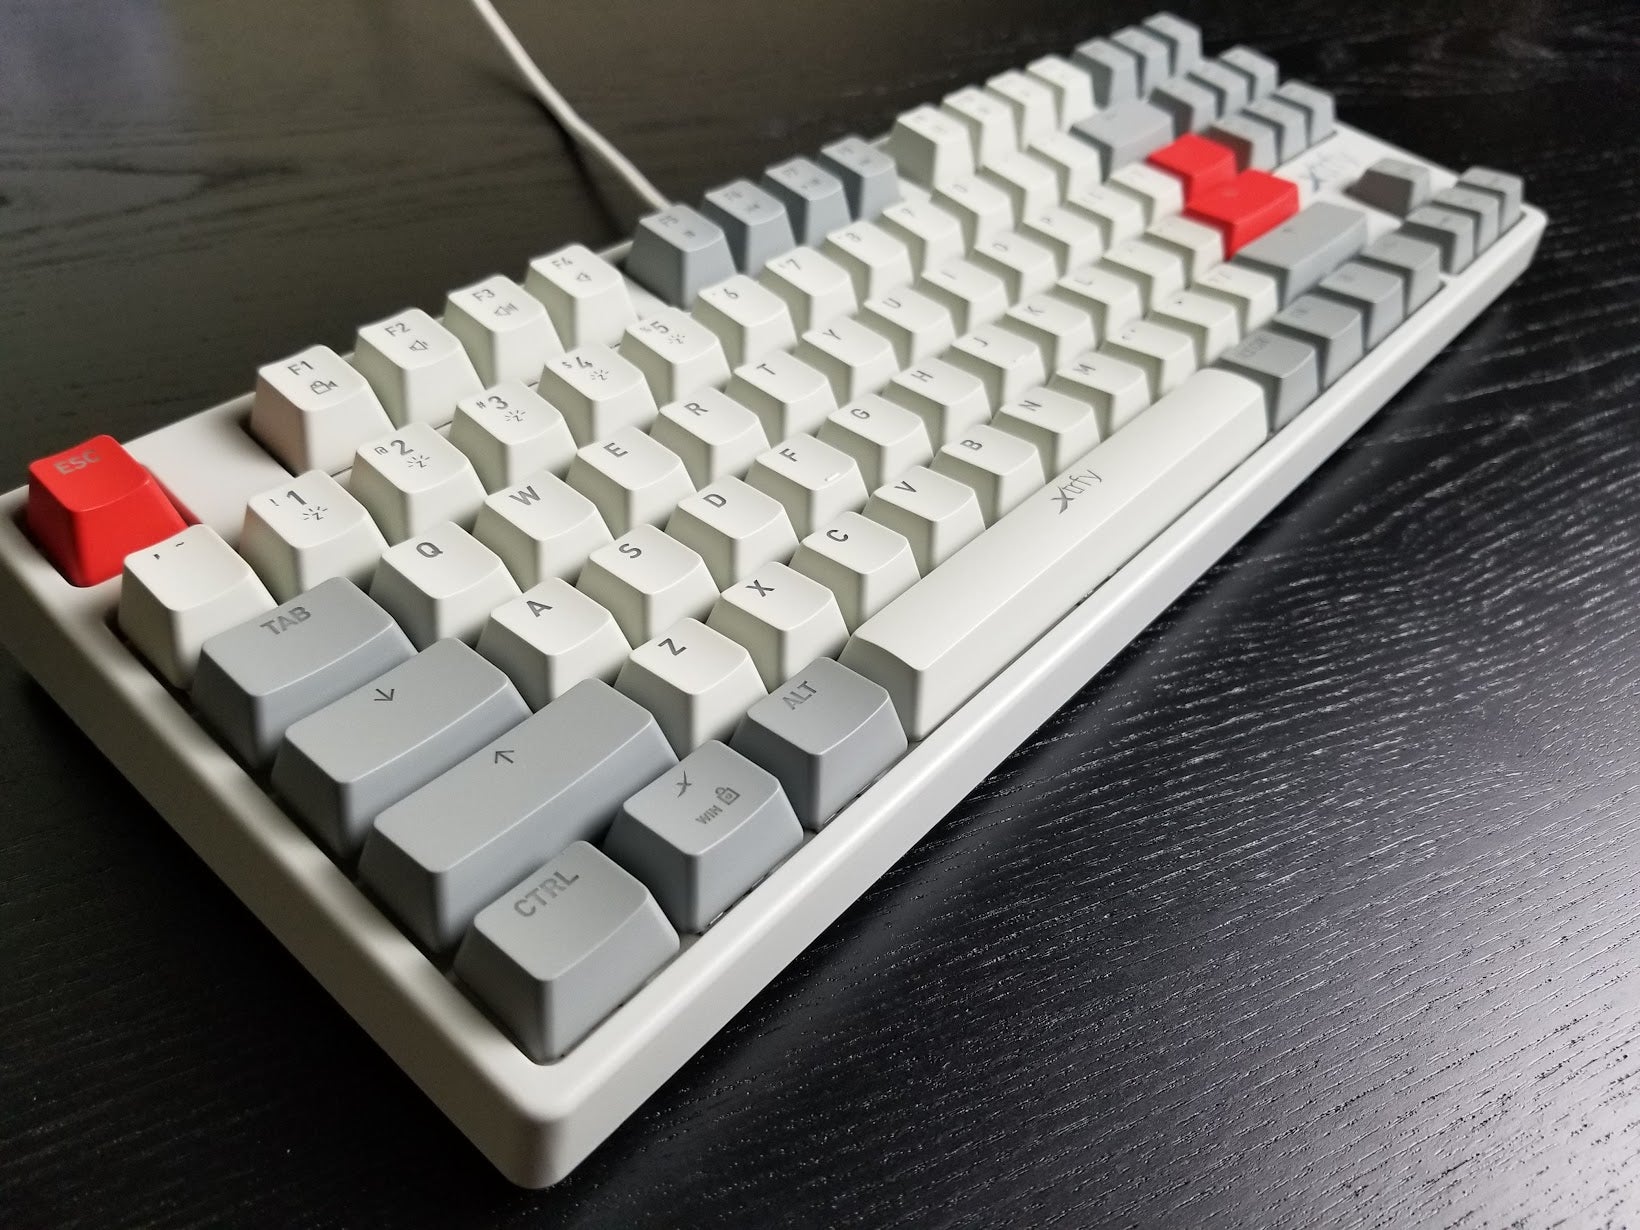 XTRFY K4 TKL Gaming Keyboard - Retro (OPEN BOX)